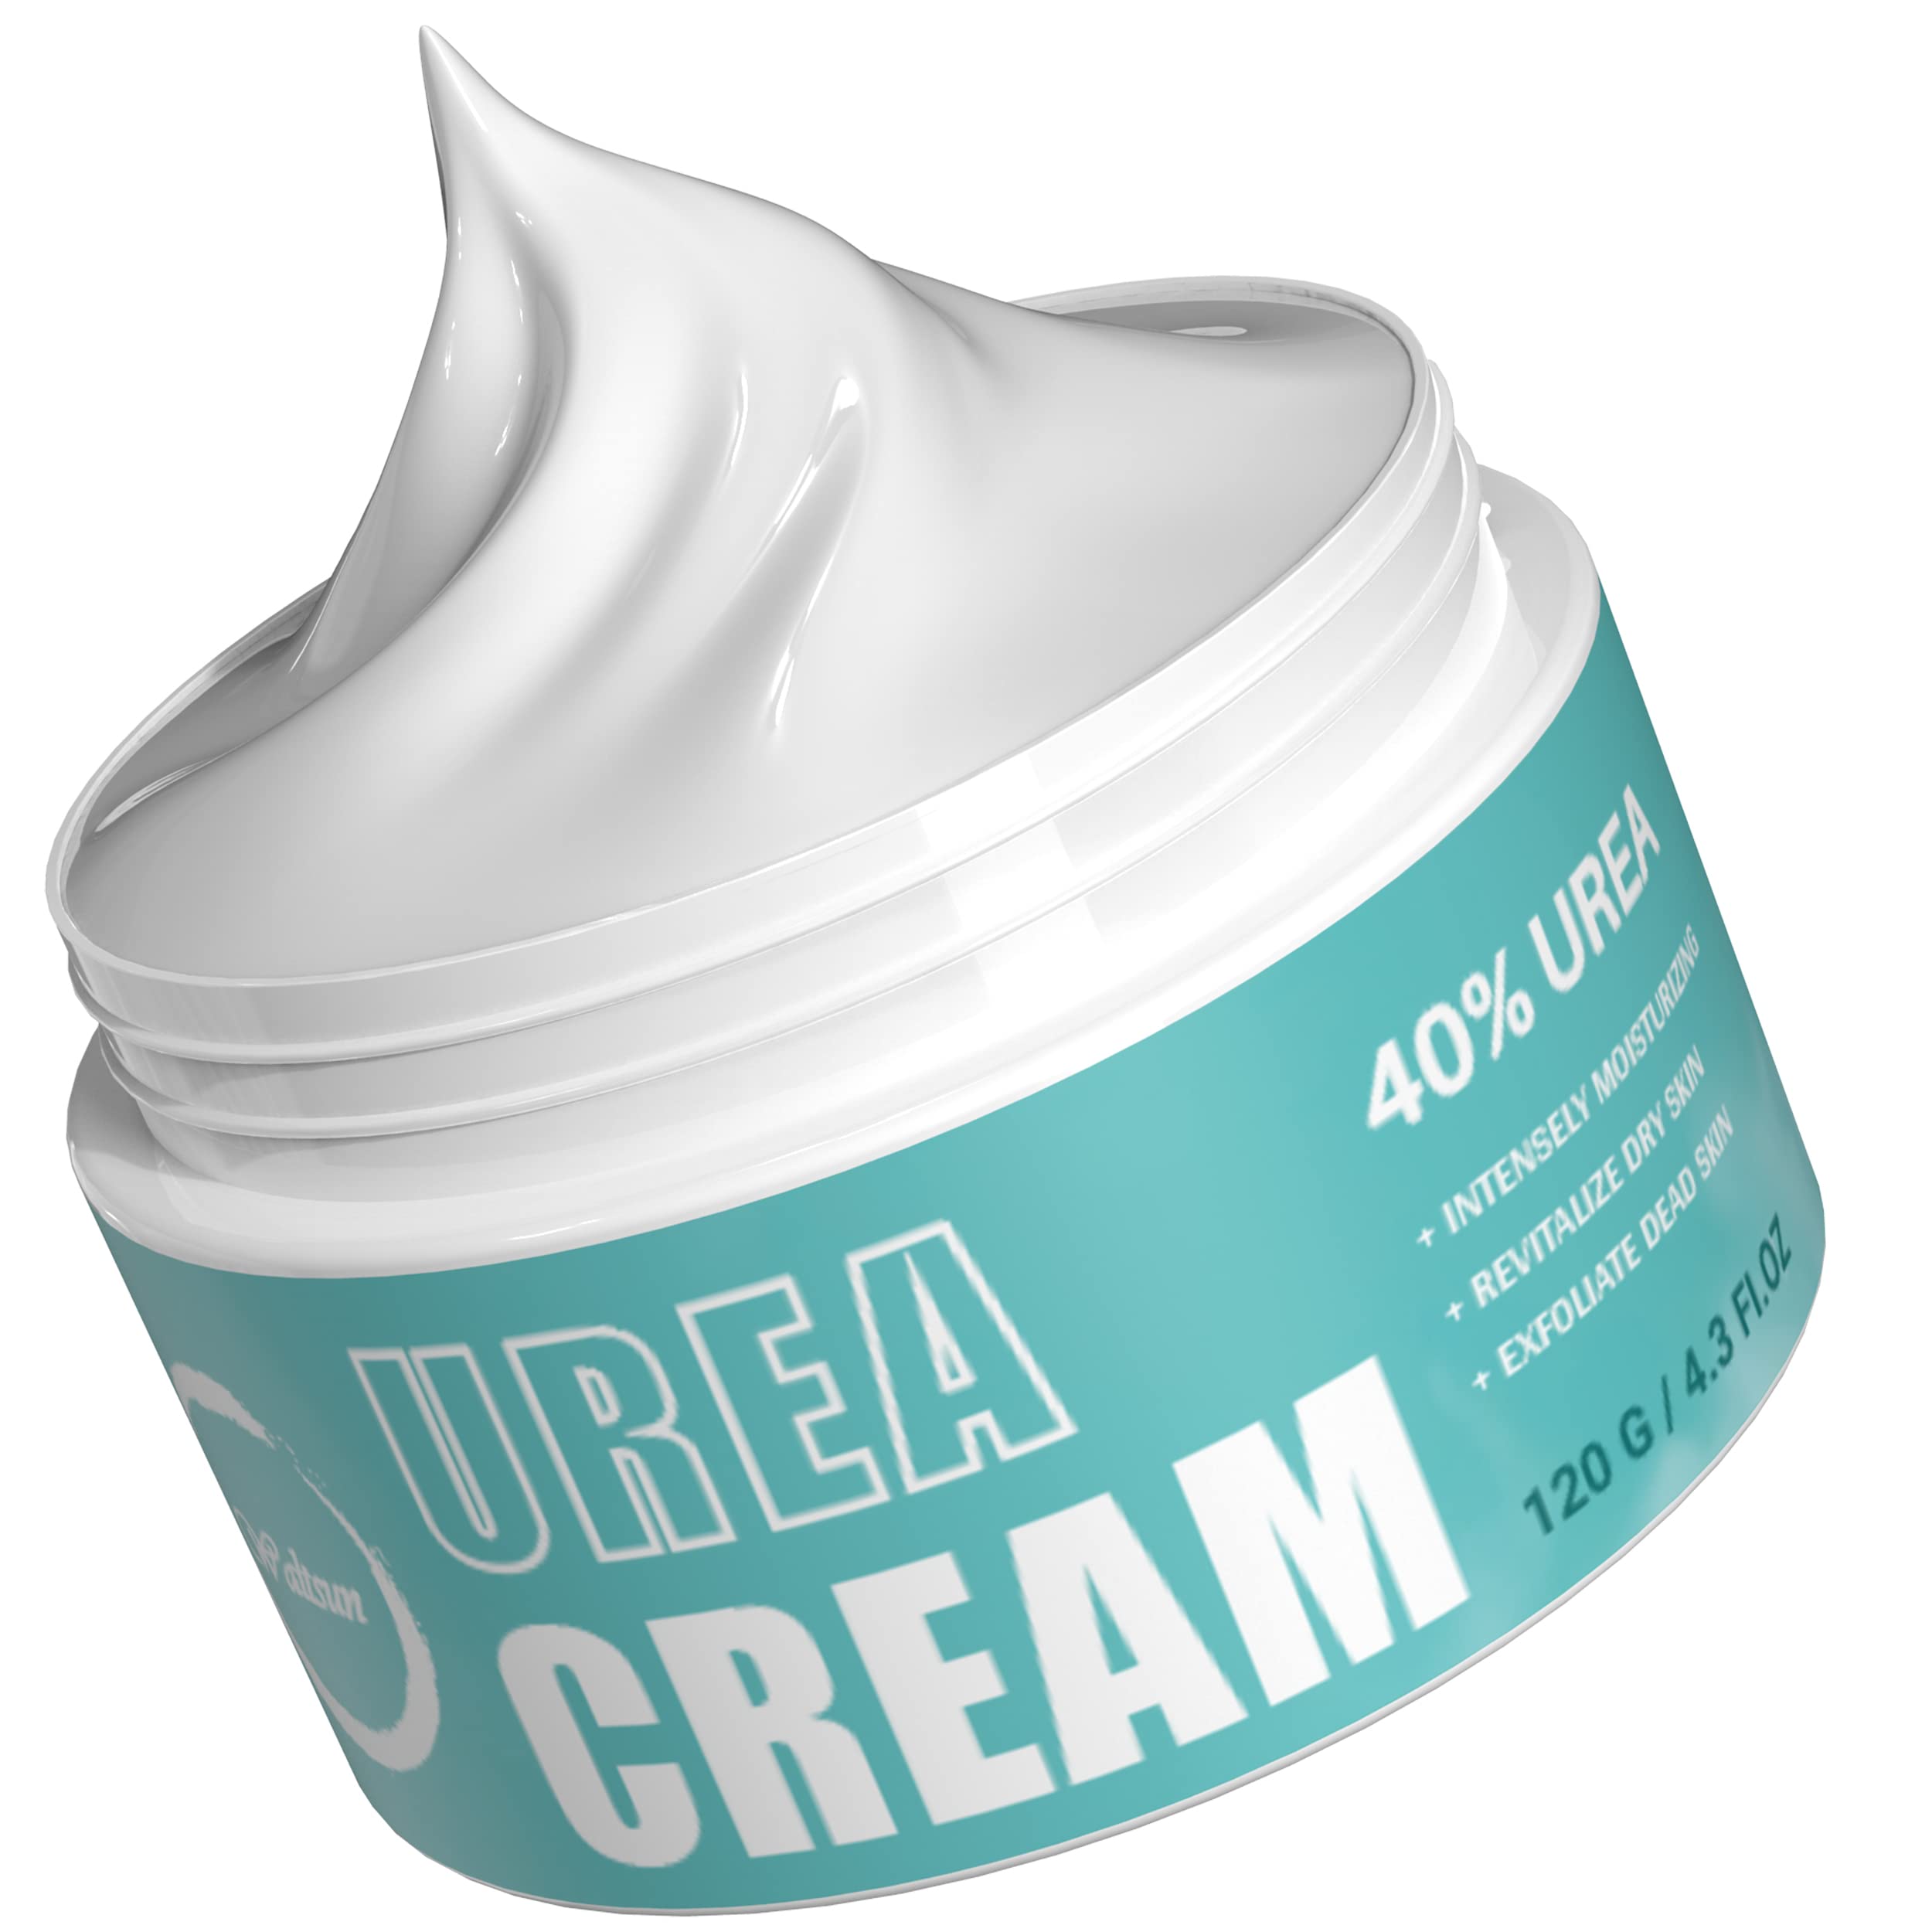 Waltsun Urea Cream 40% Hand Cream for Dry Cracked Heels Dead Skin Exfoliation Callus Remover Soften Feet Elbow Knees Hands Dry Skin Moisturizing